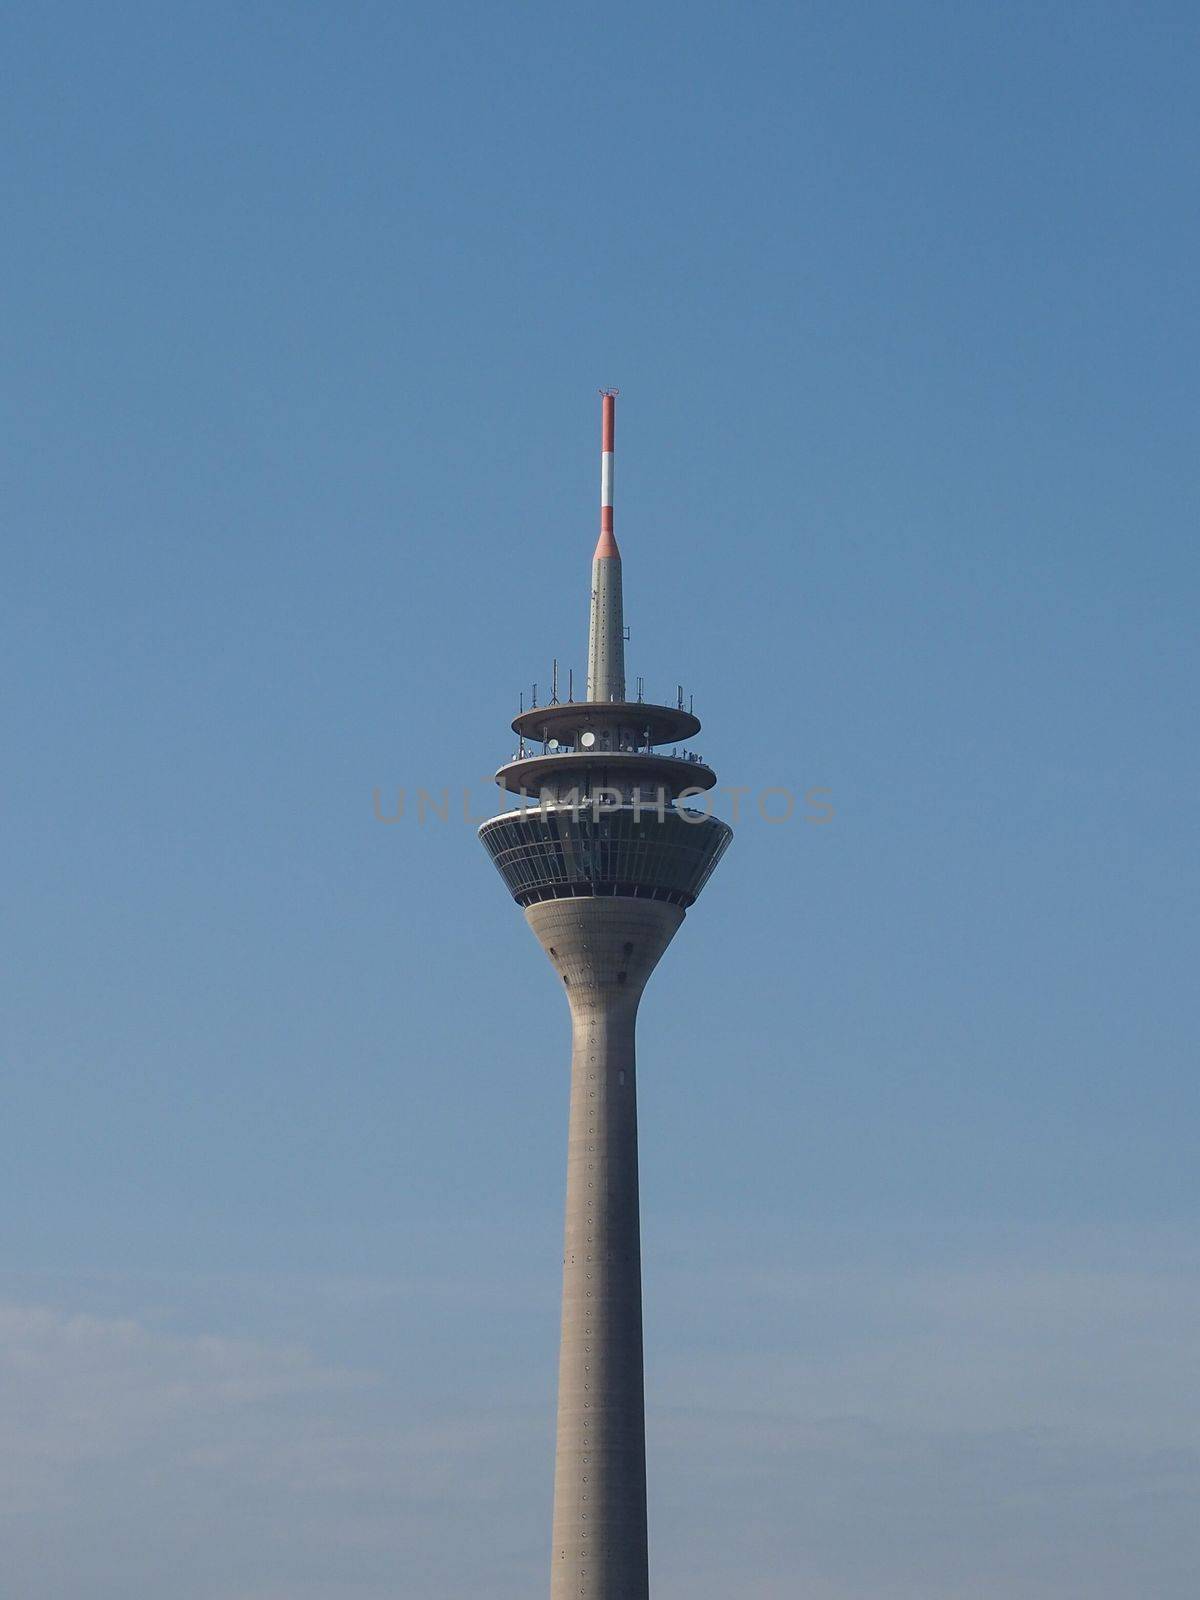 Rheinturm TV tower in Duesseldorf by claudiodivizia